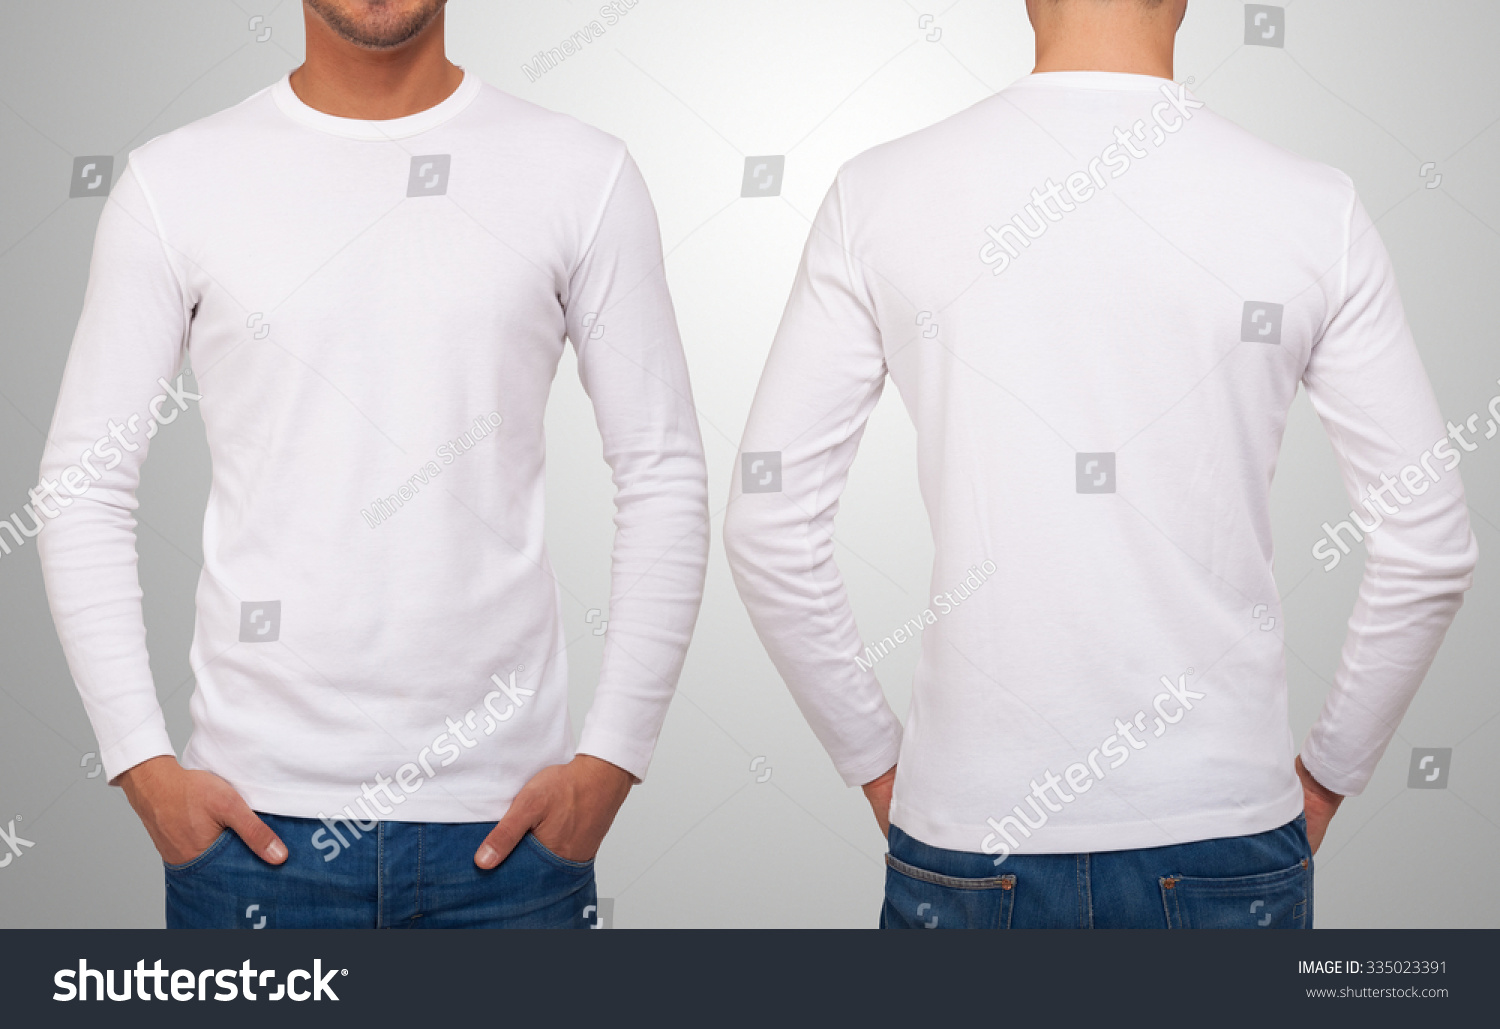 Download Man Wearing White Tshirt Long Sleeves Stock Photo ...